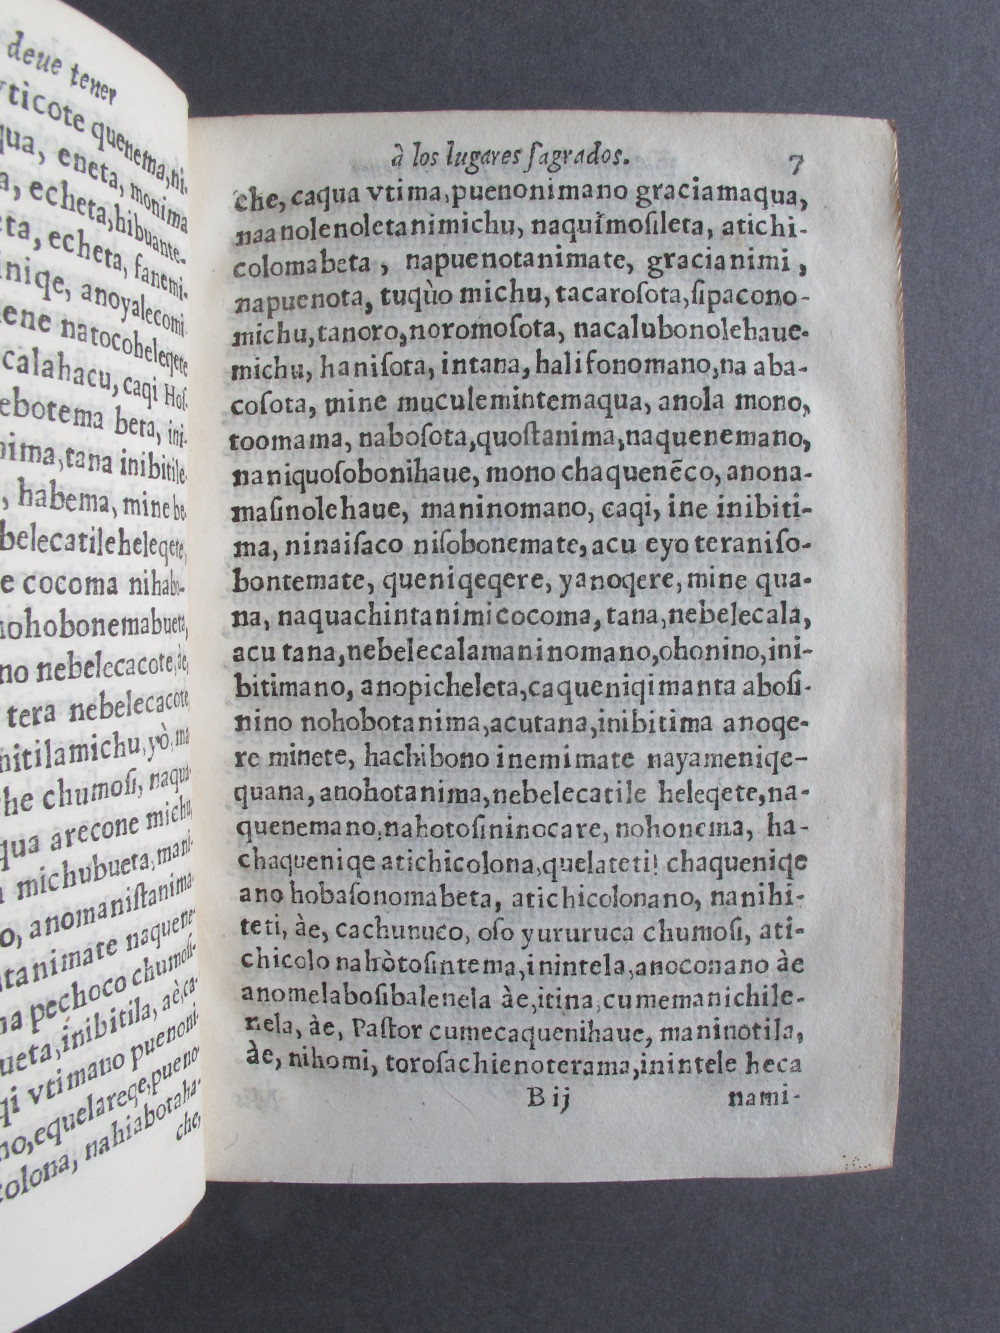 Folio B2 recto